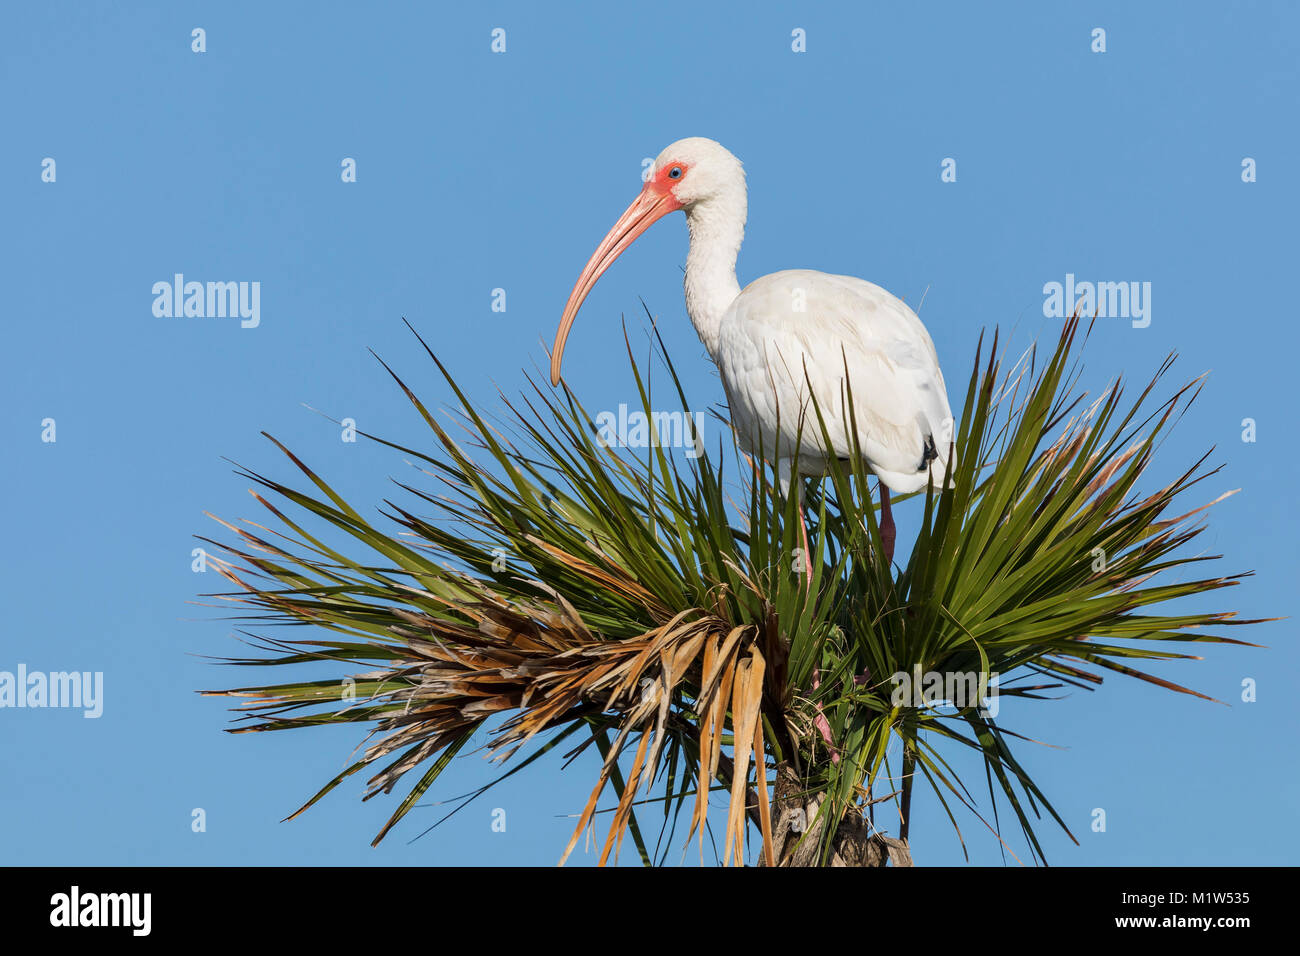 White Ibis (Eudocimus albus) perched in a palm tree - Melbourne, Florida Stock Photo